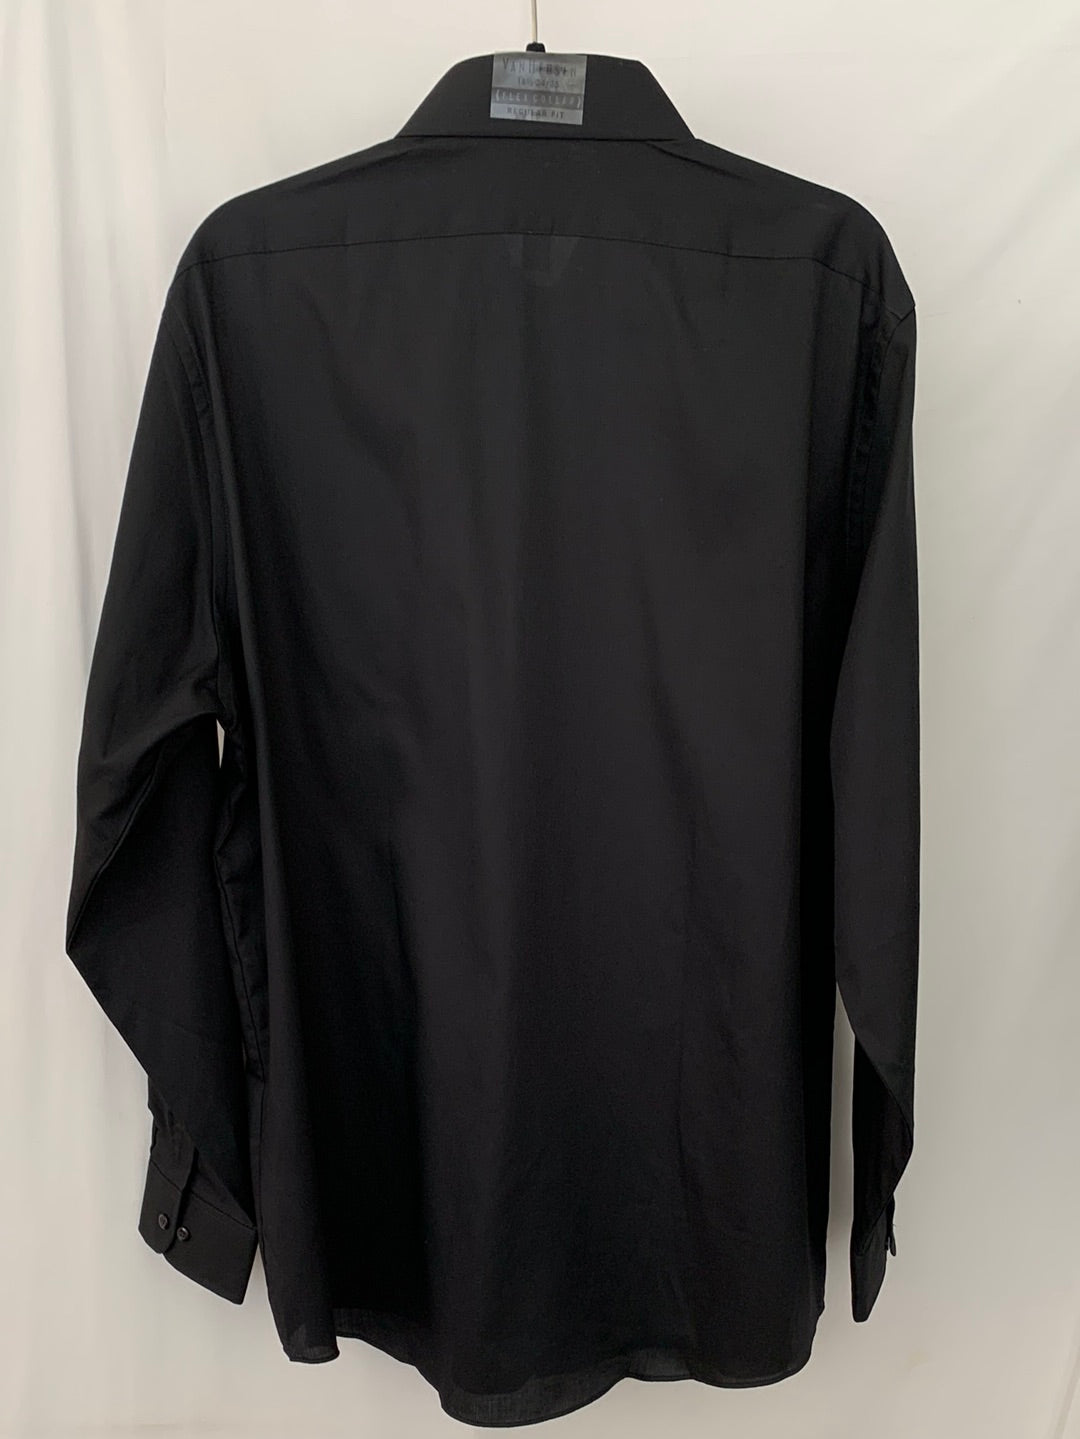 NWT - VAN HEUSEN Black Flex Collar Regular Fit Wrinkle Free Dress Shirt - Size 16.5 34/35